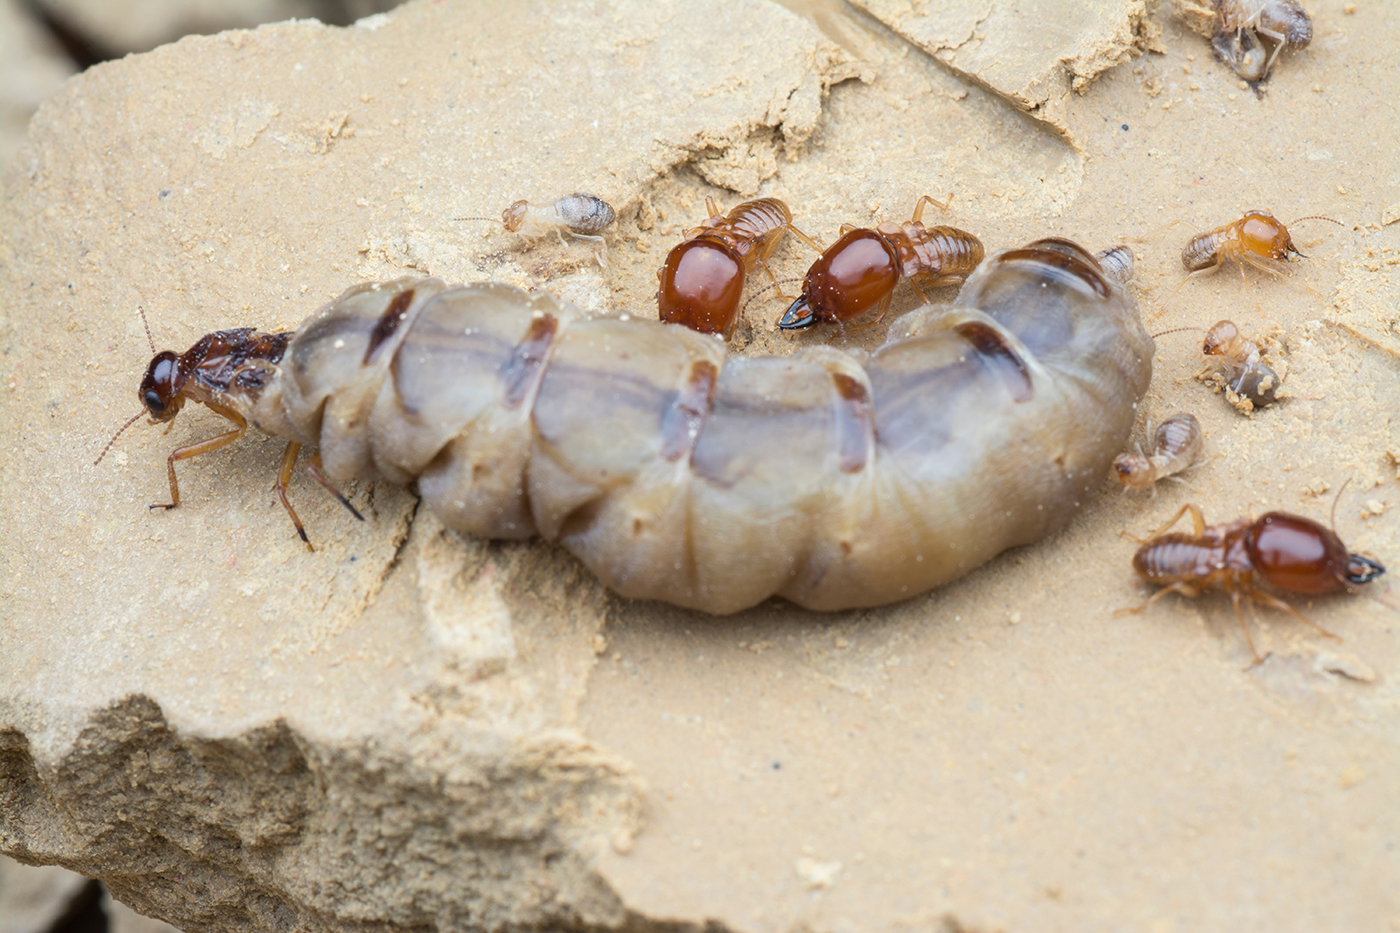 Termite Season is Upon Us!